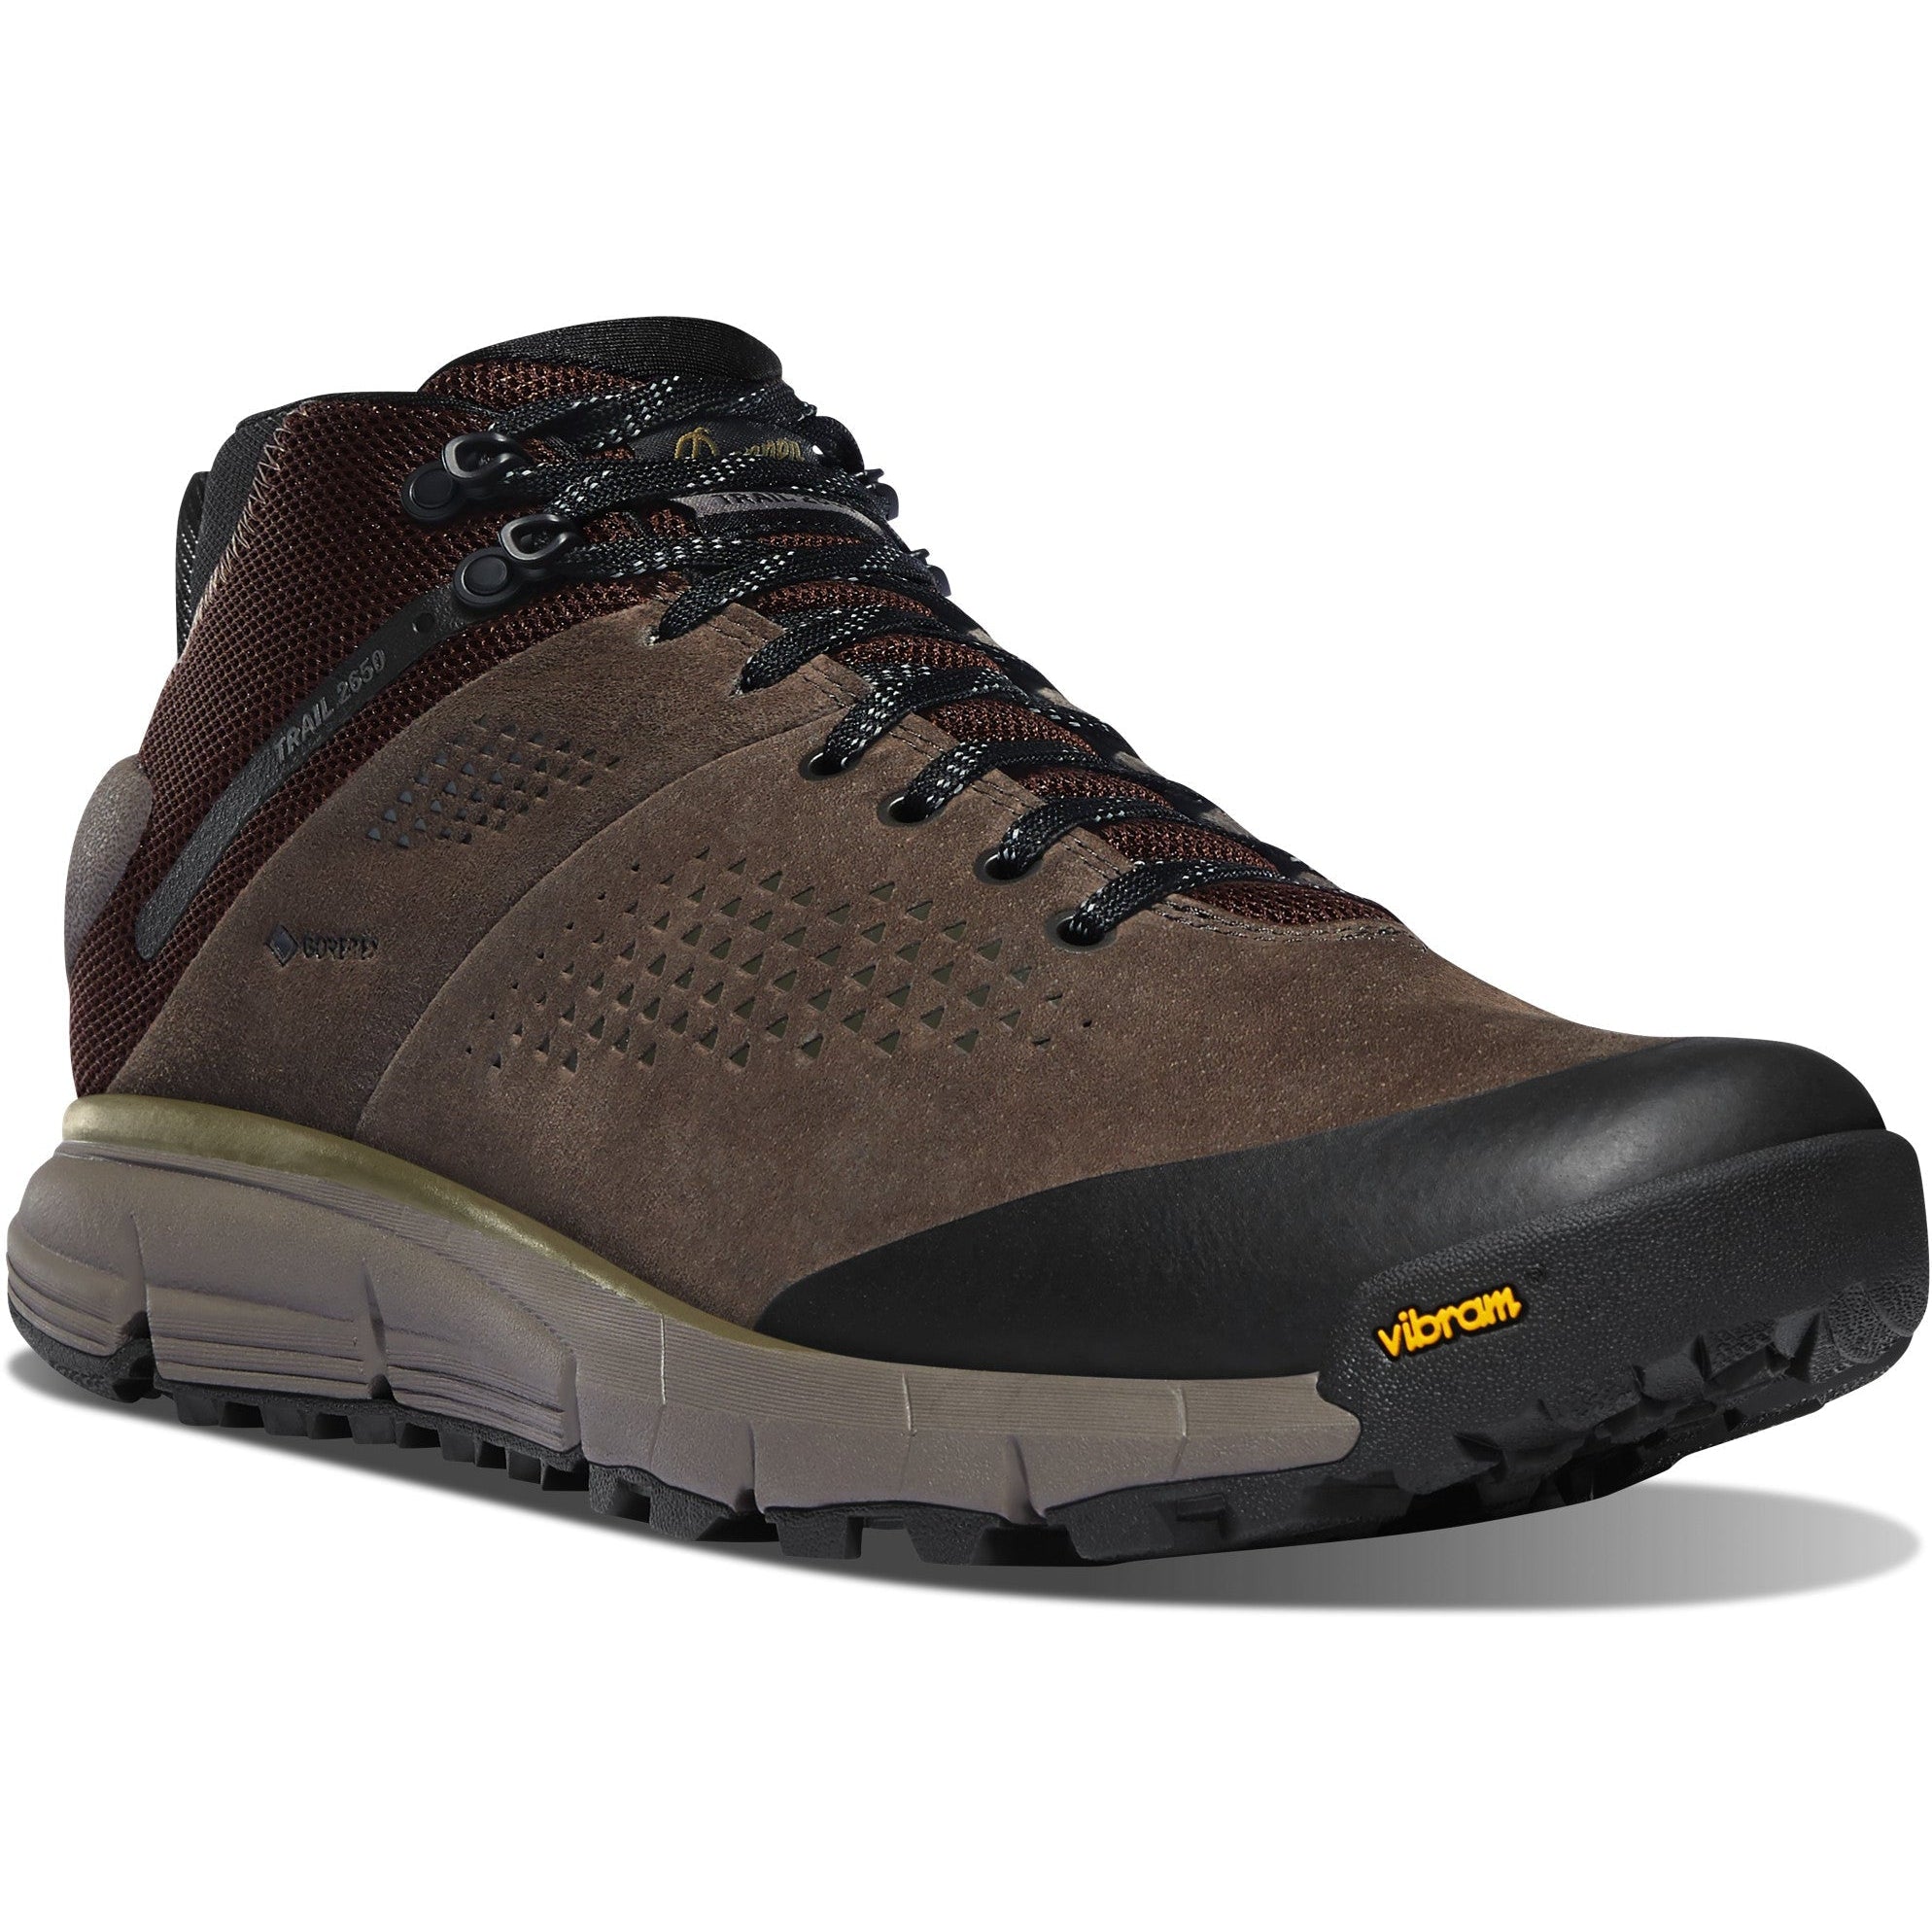 Danner Men's Trail 2650 GTX Mid 4" WP Hiking Shoe - Brown - 61243 7 / Medium / Brown - Overlook Boots